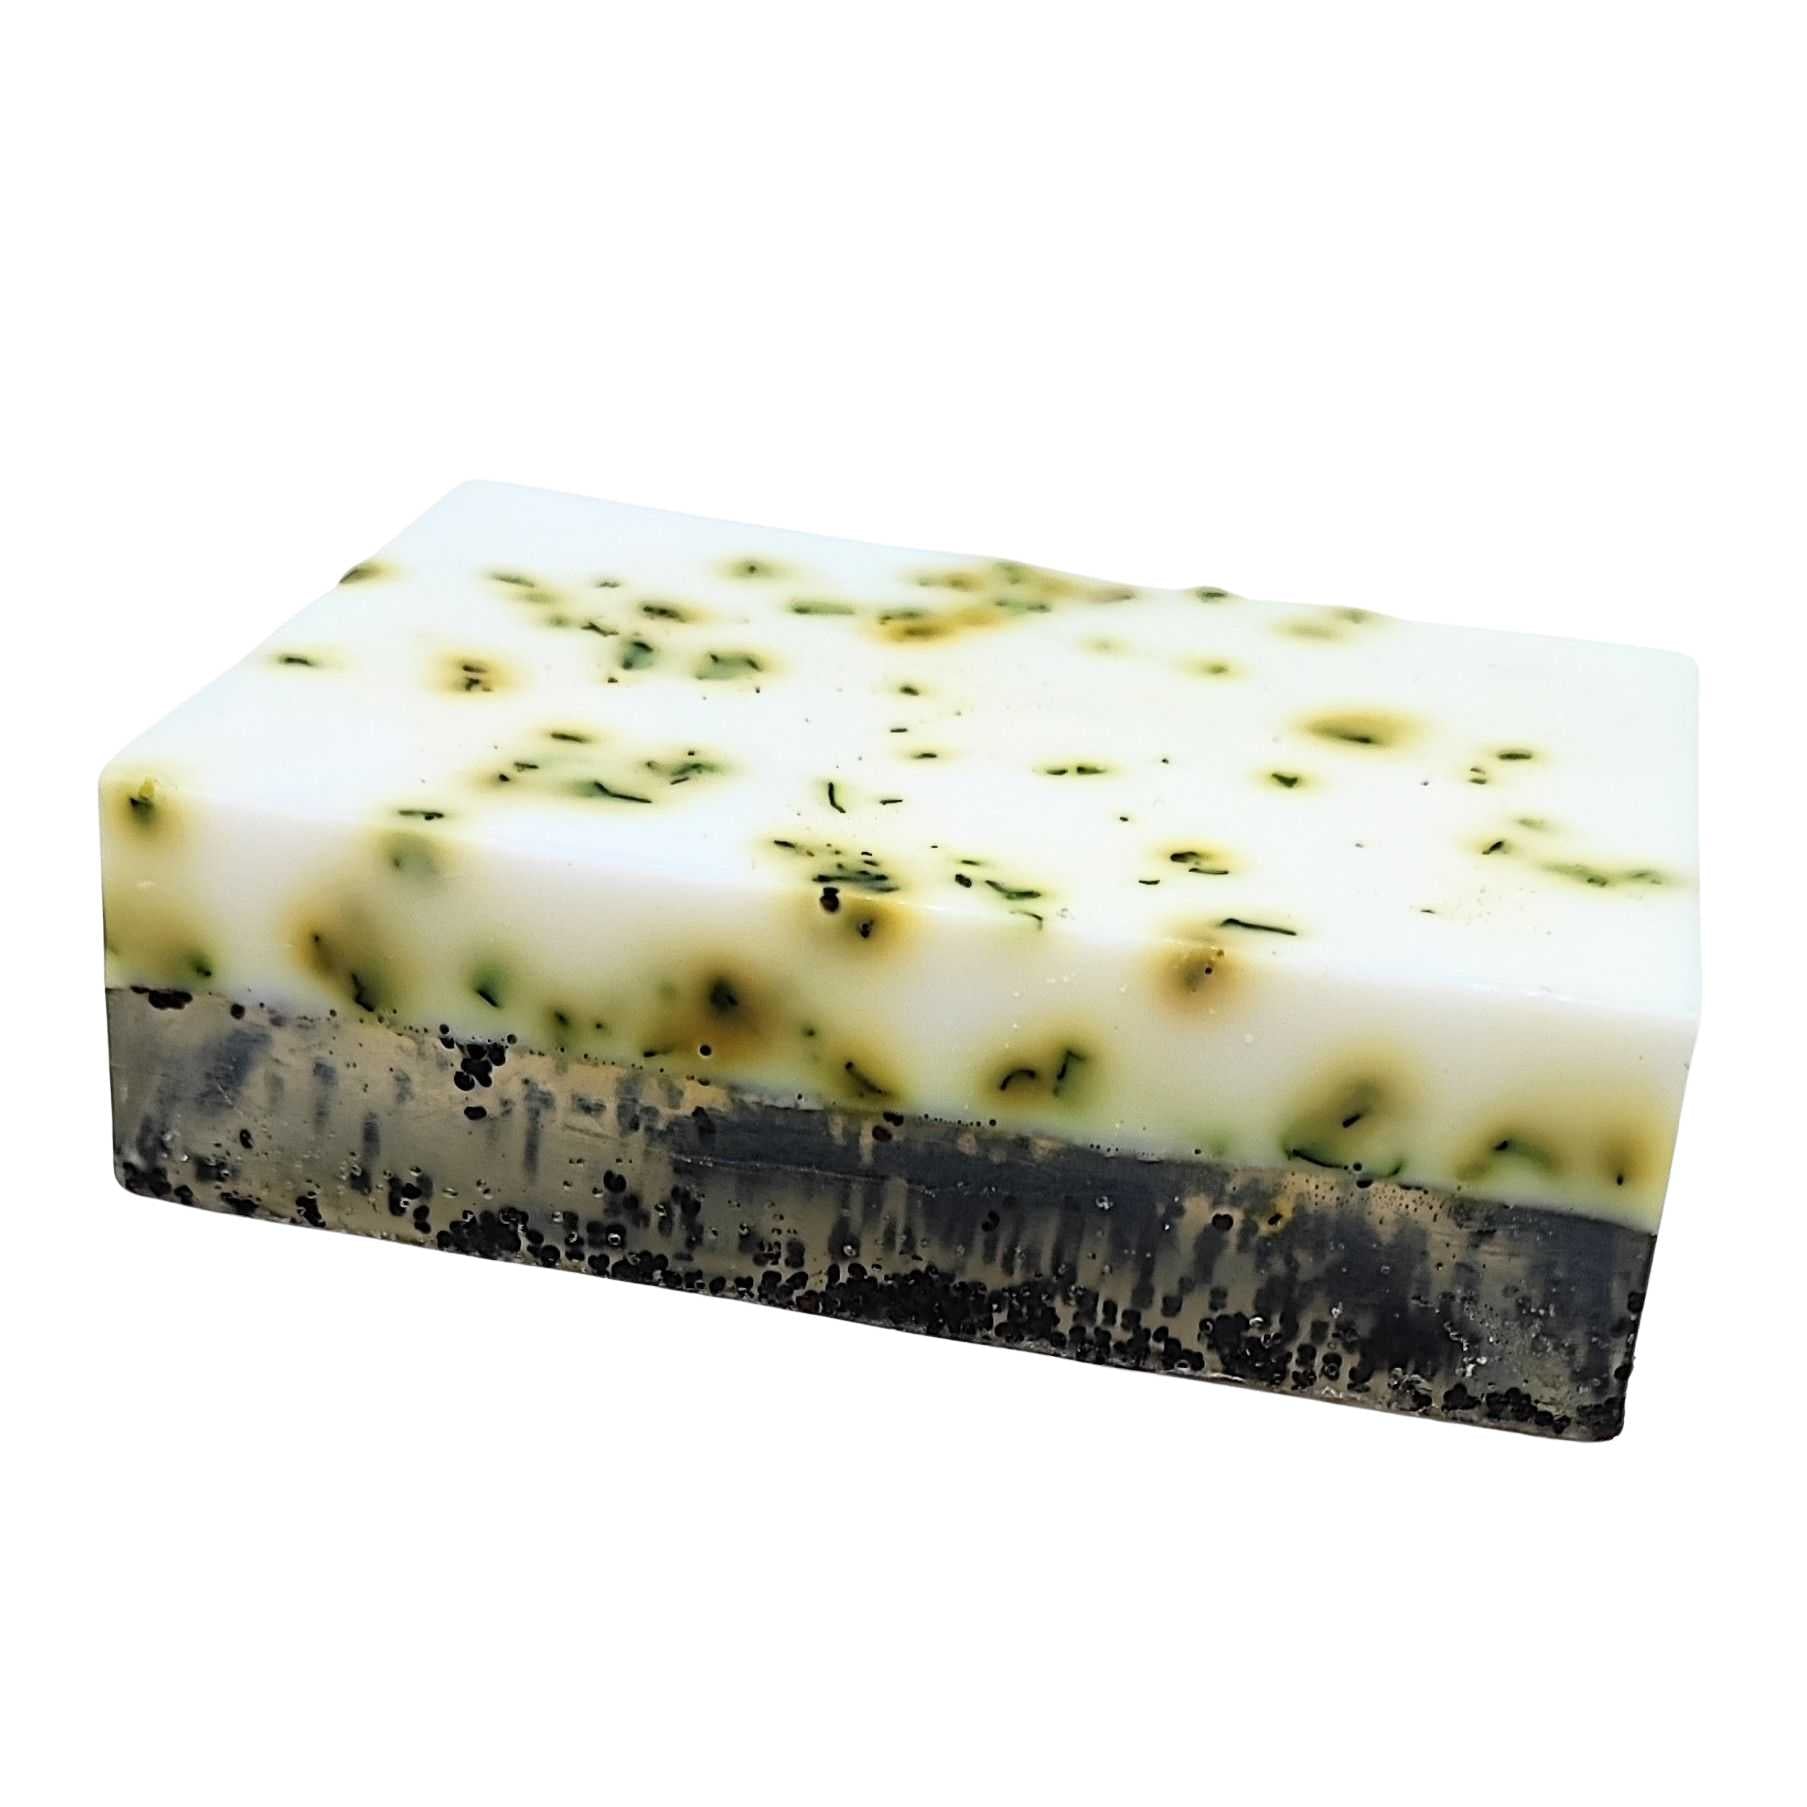 Soap Bar -Peppermint & Eucalyptus -4oz -Herbal Scent -Aromes Evasions 